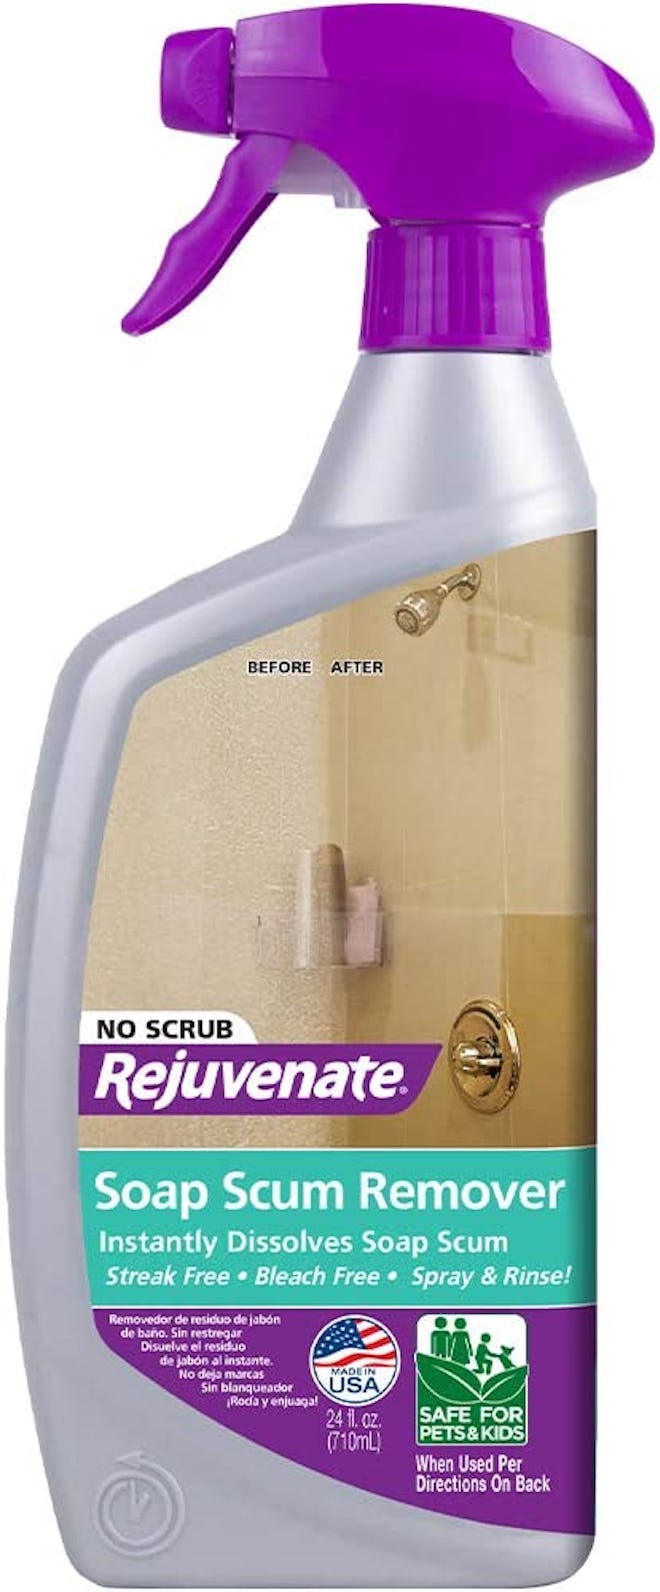 Rejuvenate Scrub Free Soap Scum